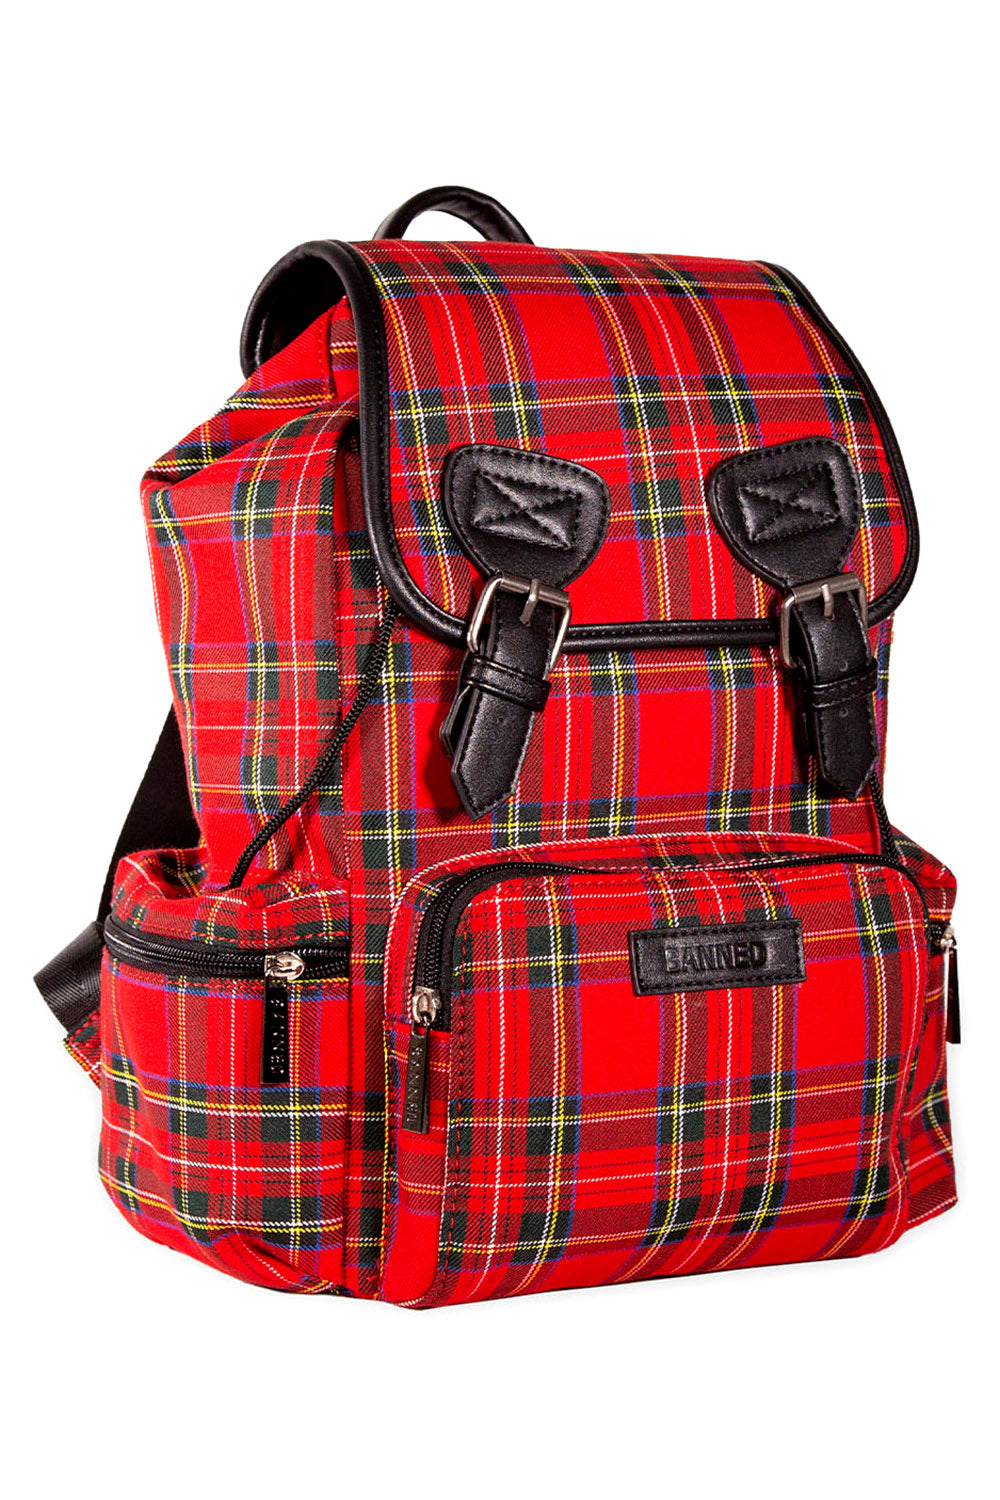 Mad Plaid Backpack [RED PLAID]